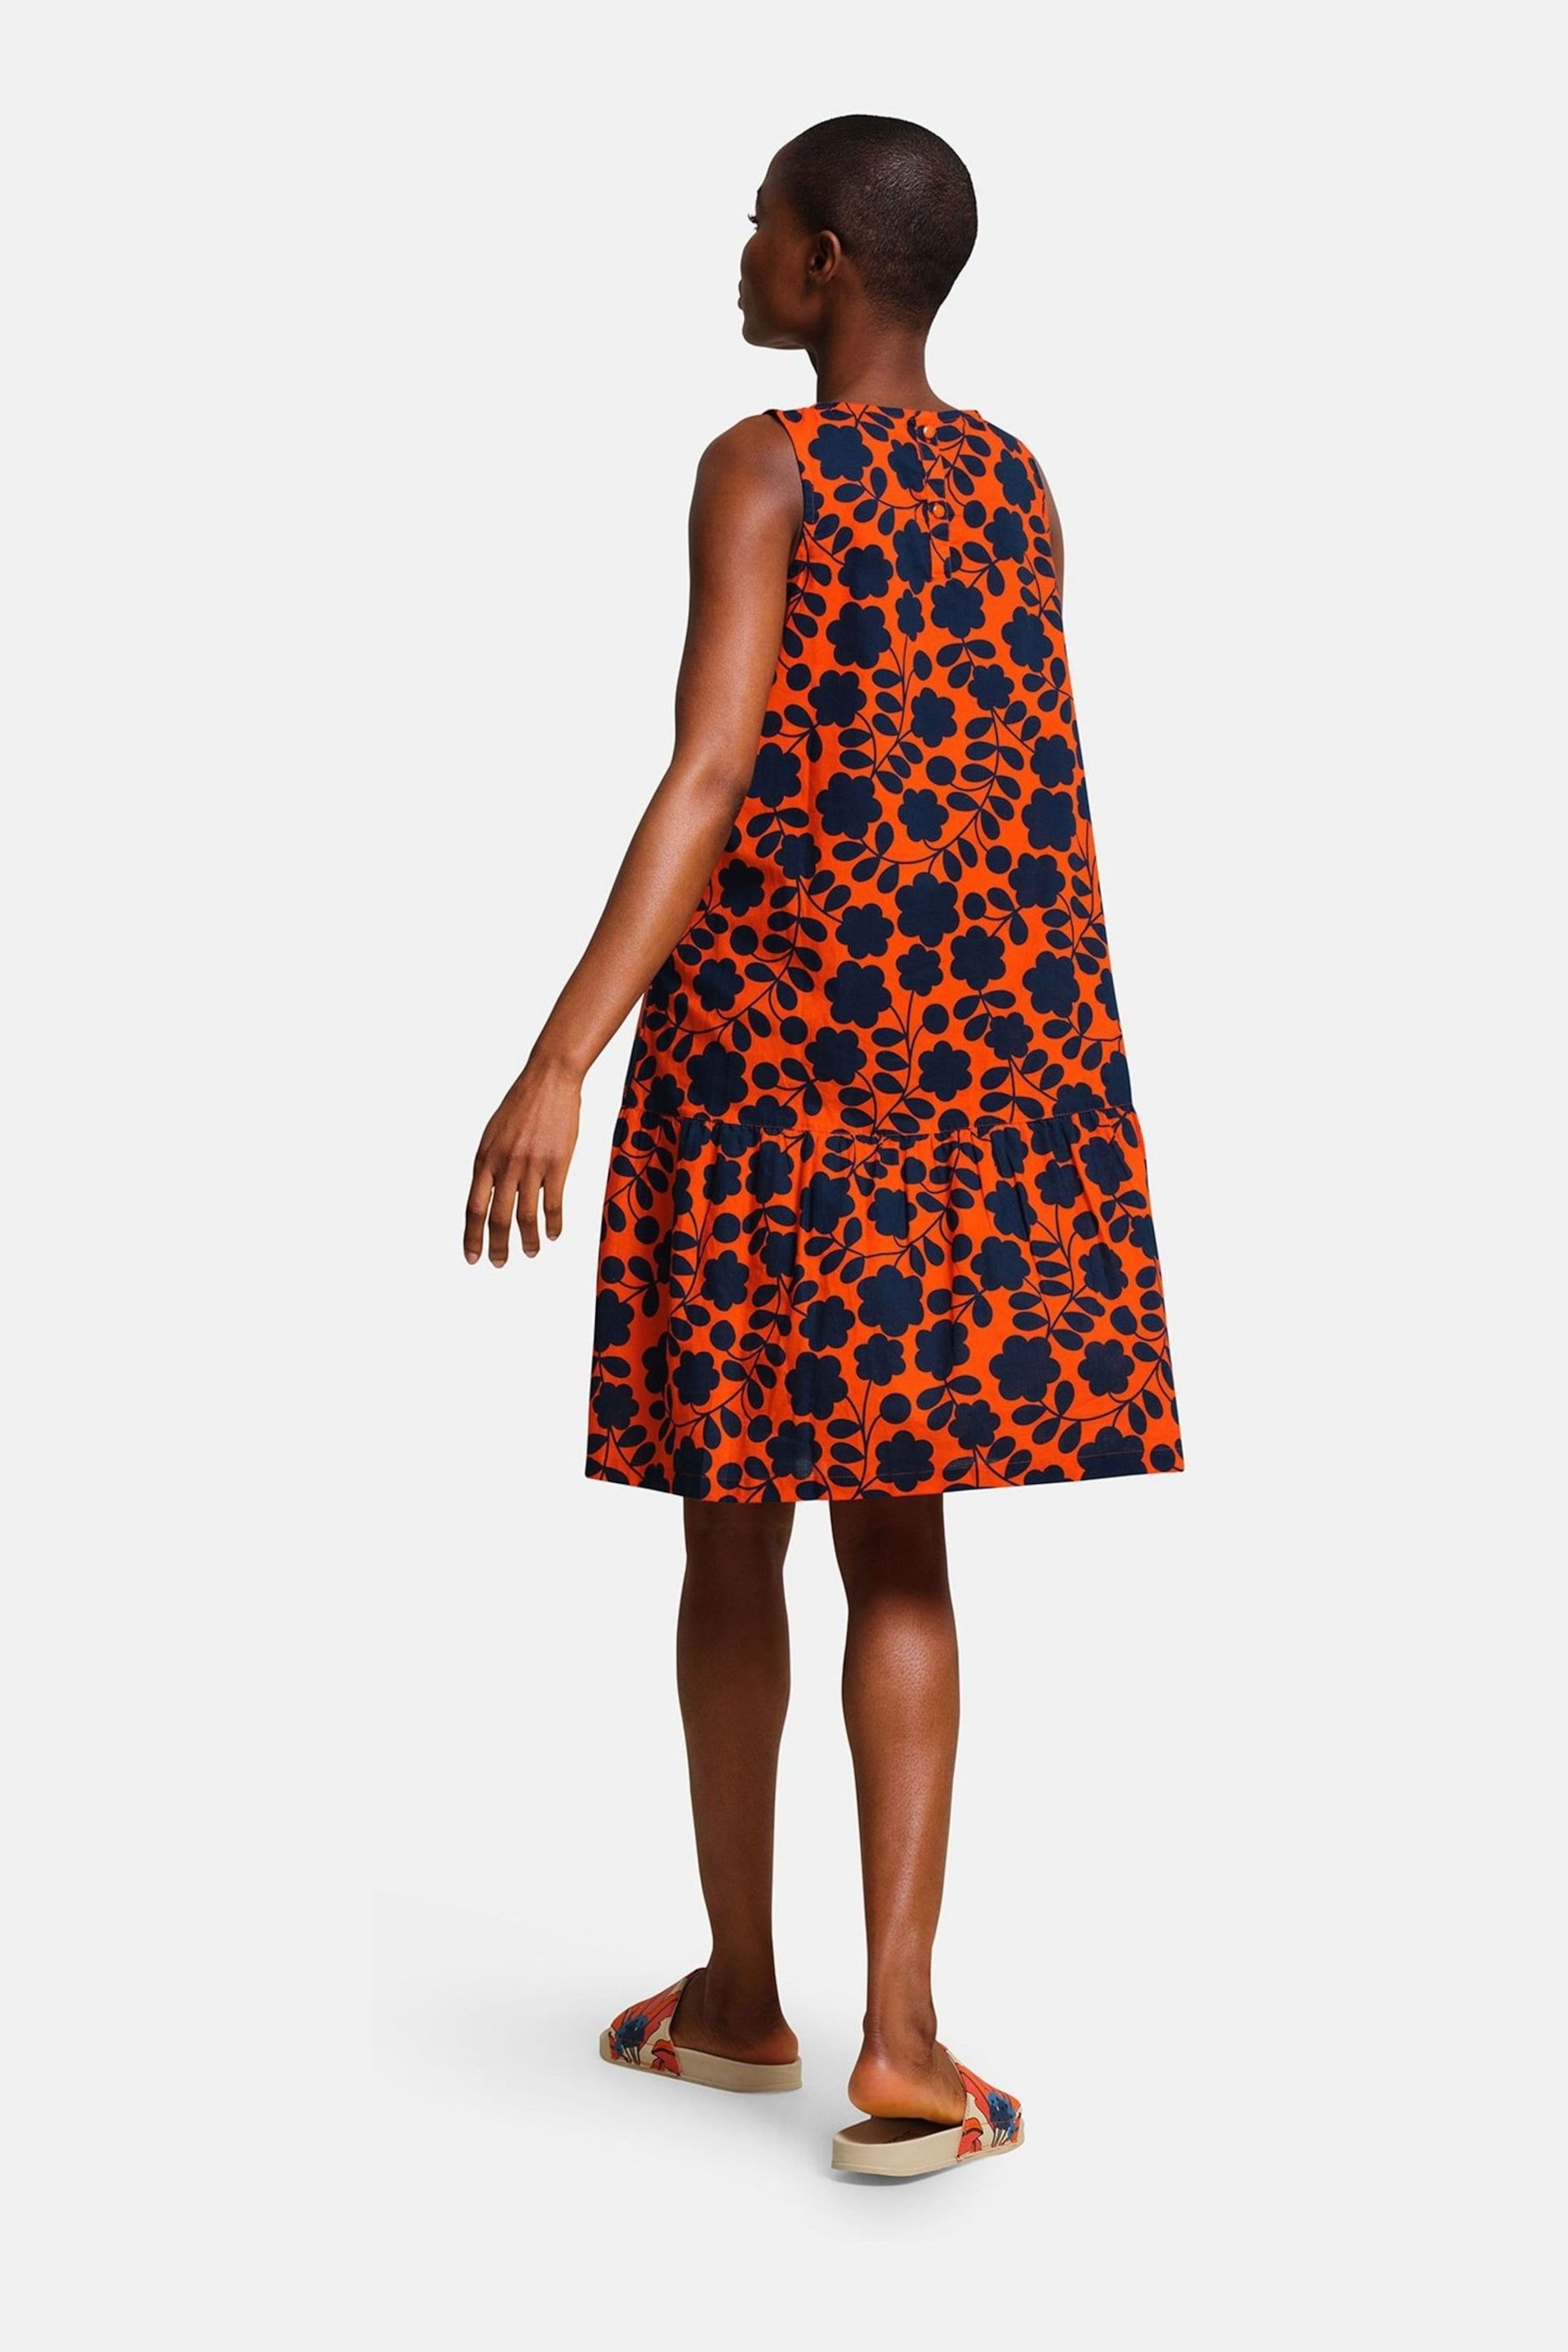 Regatta Orange Orla Kiely Summer Sleeveless Dress - Image 2 of 8